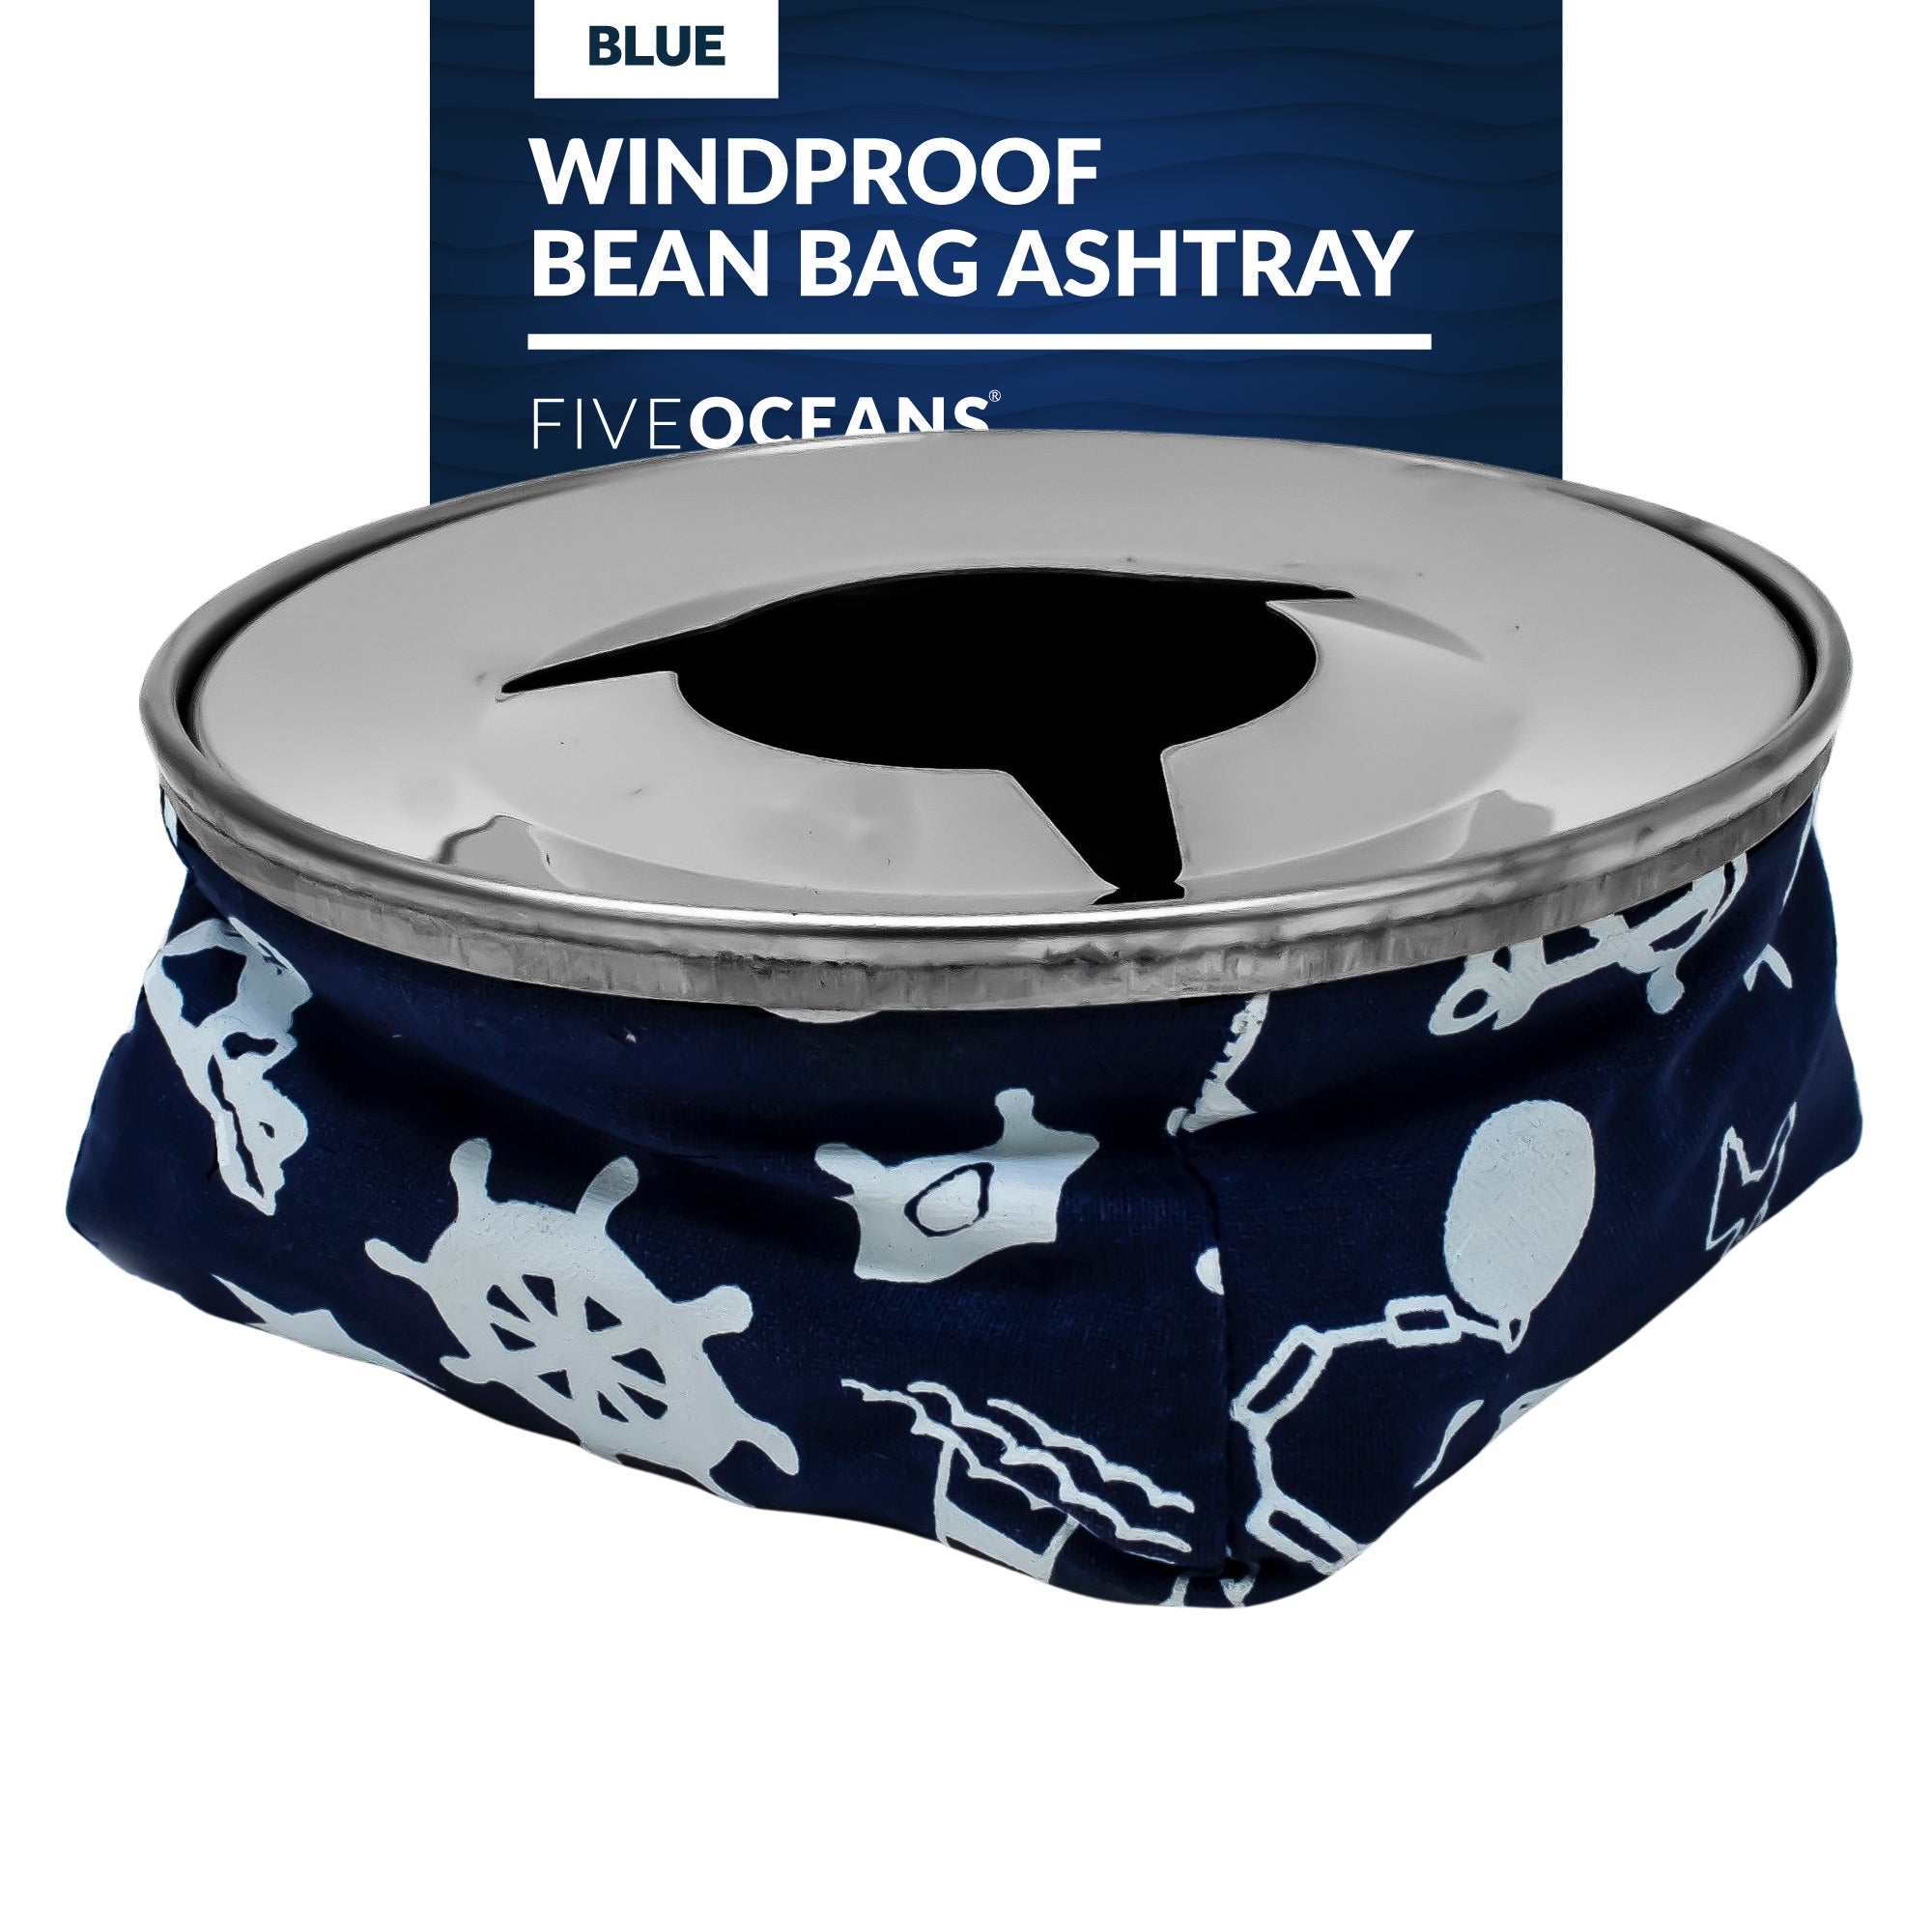 Windproof Bean Bag Ashtray, Blue - FO101